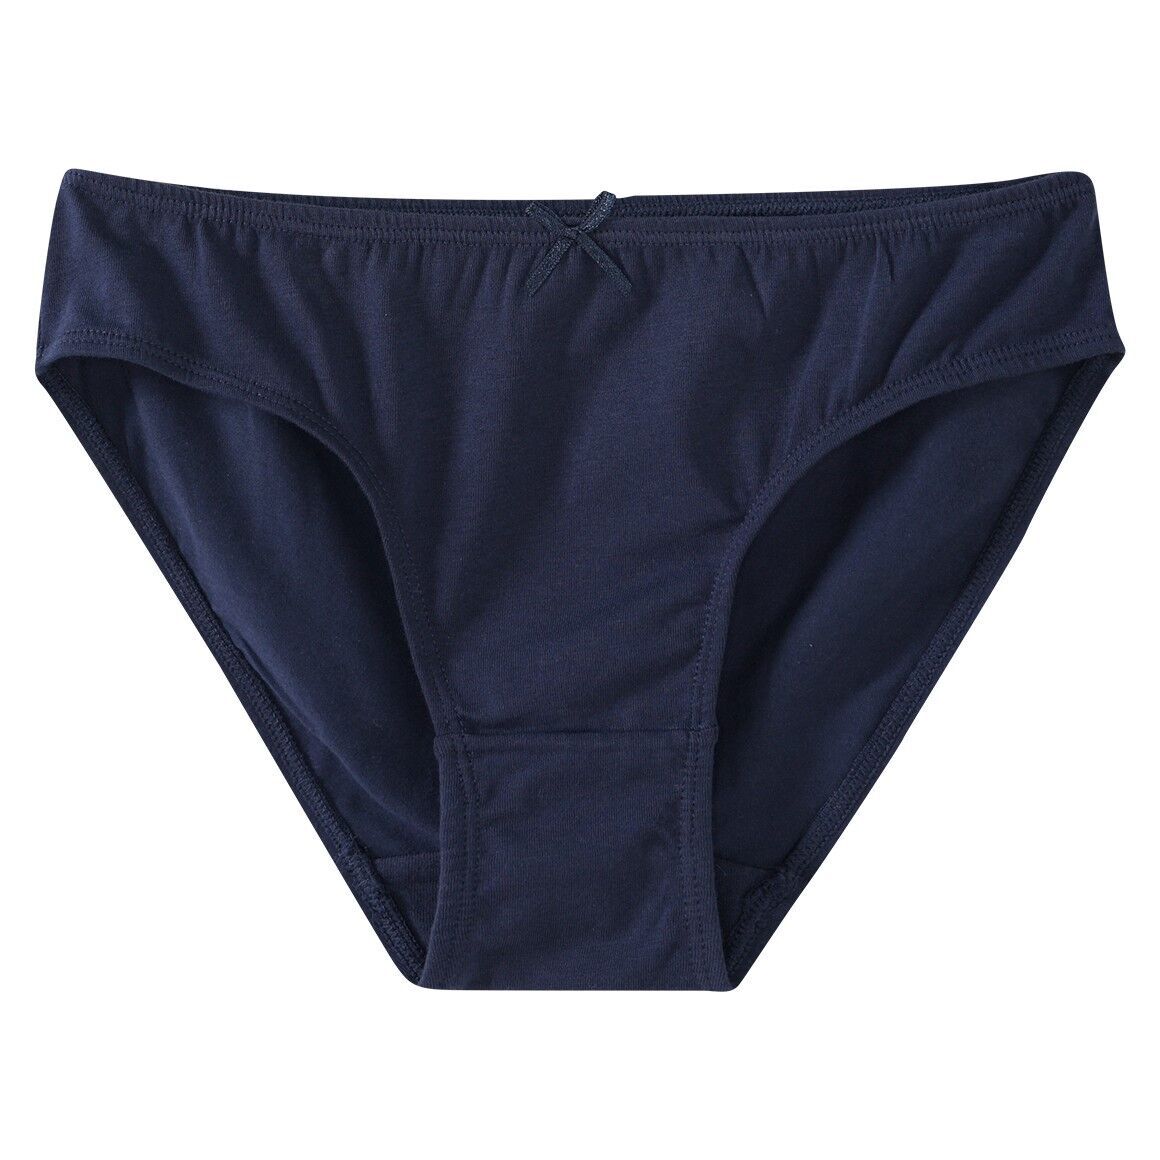 Buy Wholesale China Kids Cotton Panties Floral Print Bikini Underwear For Teen  Girls & Kids Cotton Panties at USD 0.75